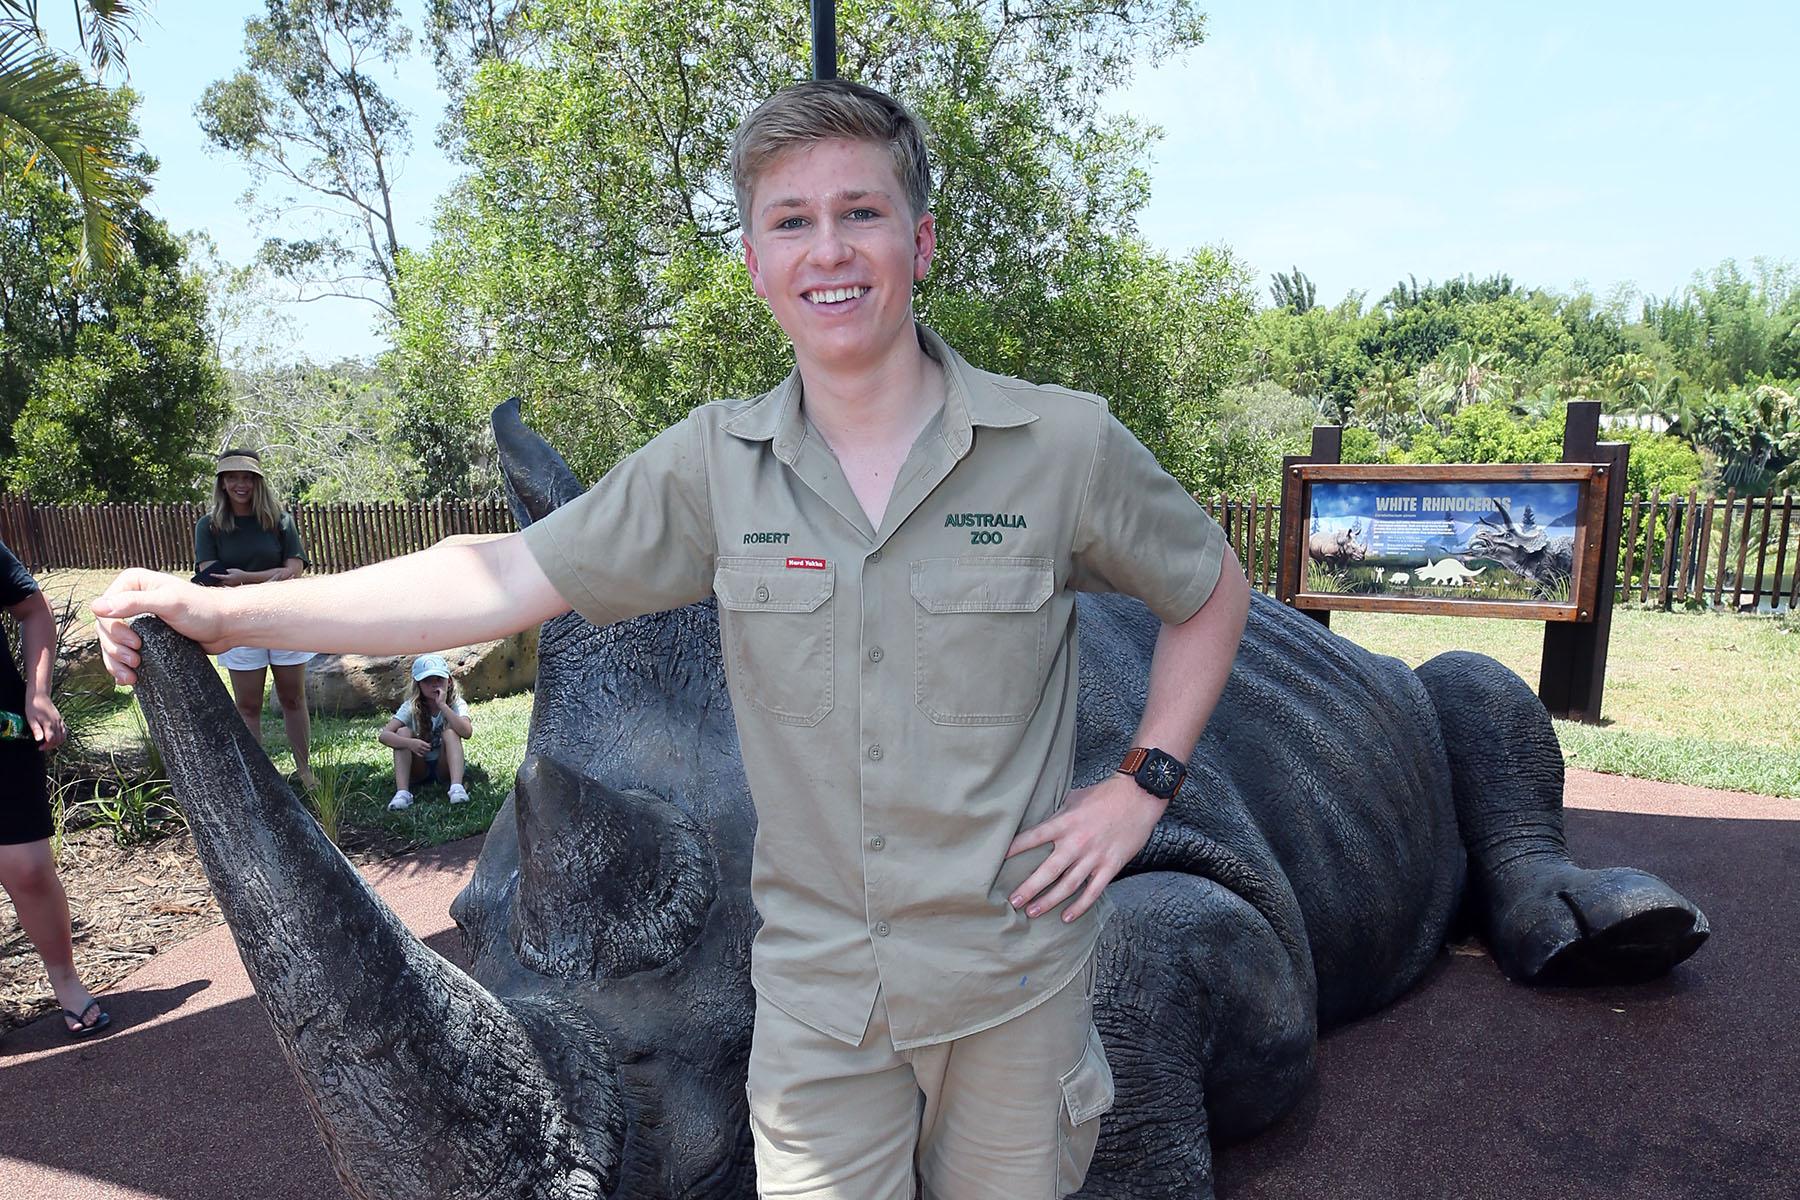 Robert Irwin feeds the crocs on his 16th Birthday at Australia Zoo